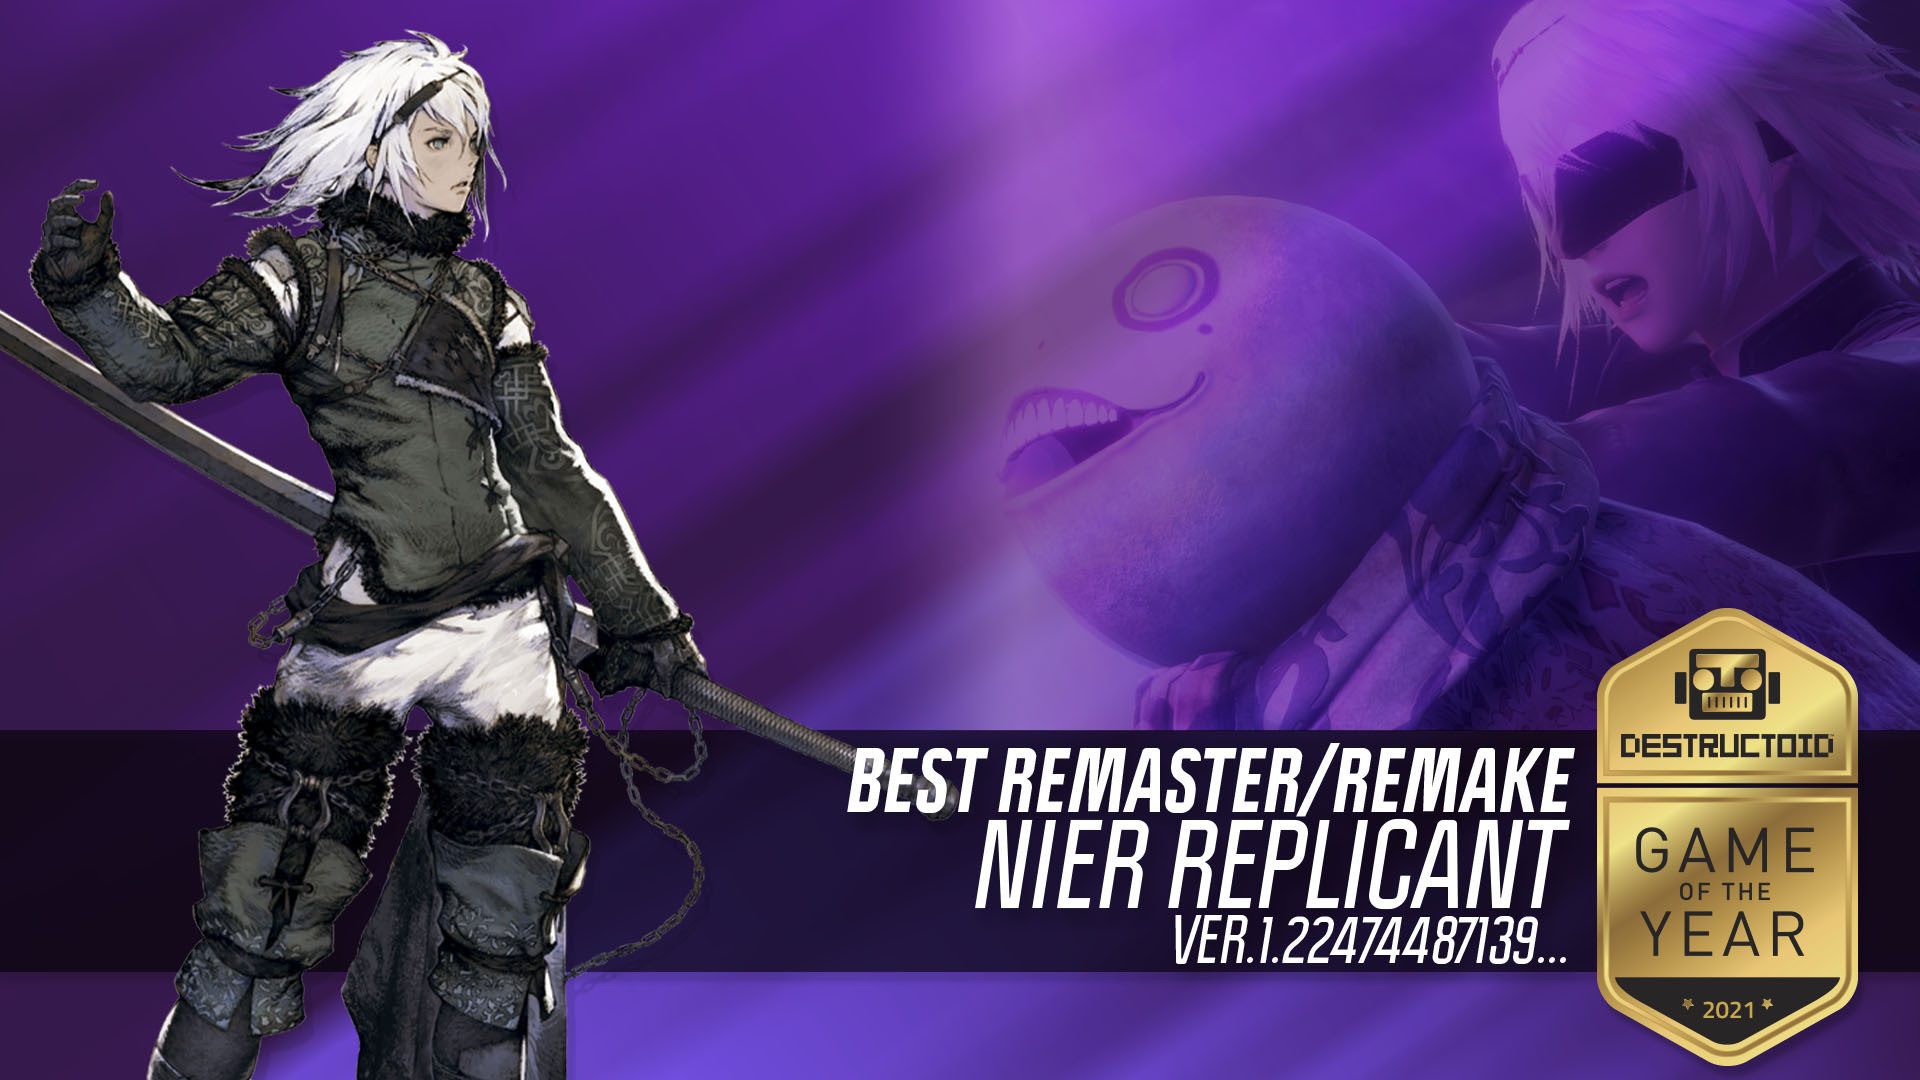 NieR Replicant - Original vs Remake (2010 vs 2021) 